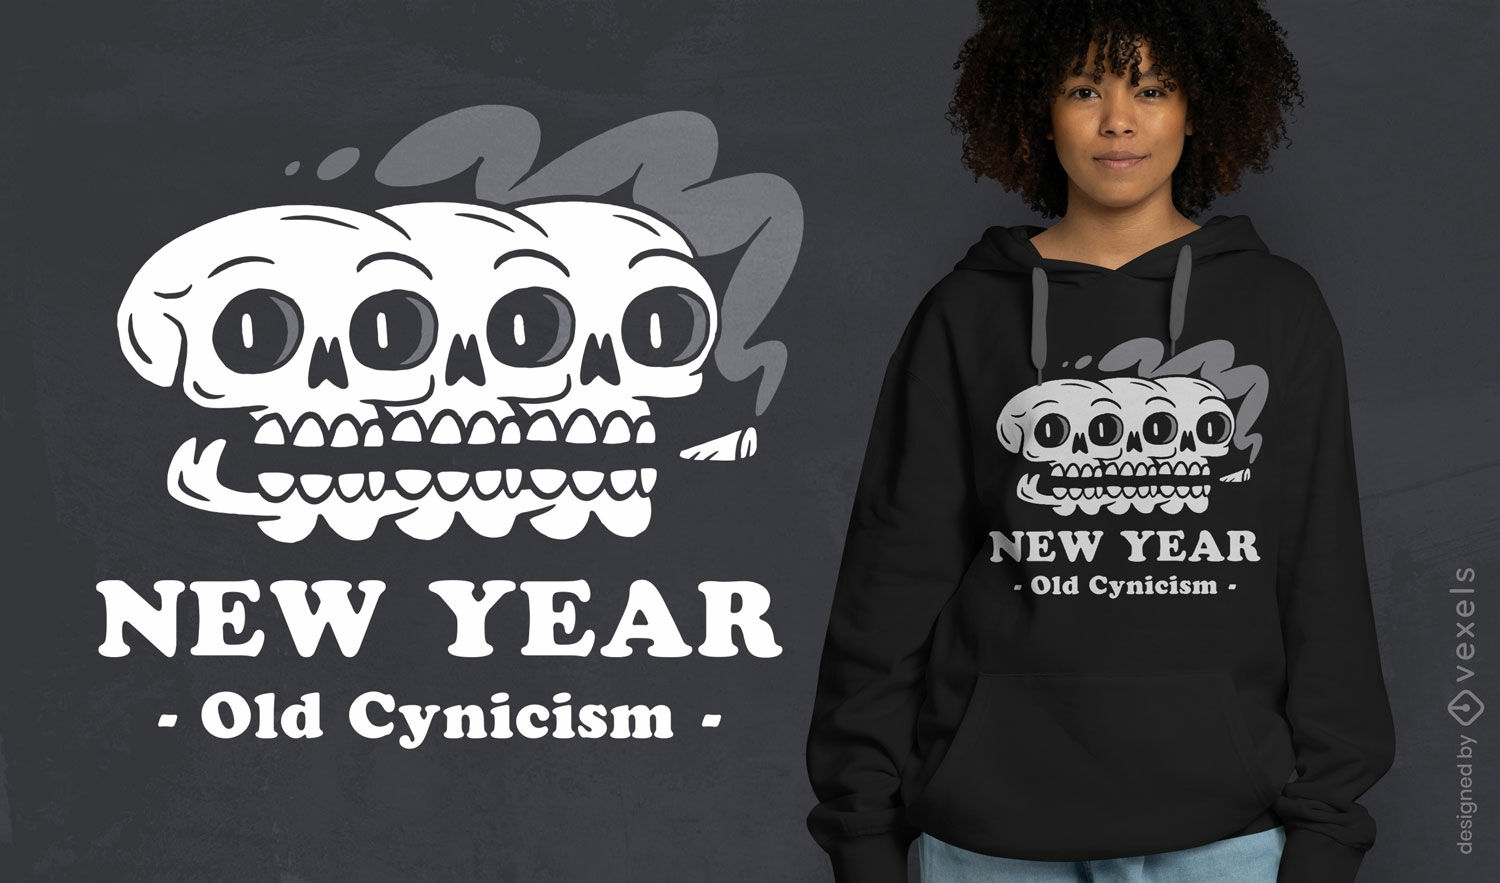 Cynic New year t-shirt design